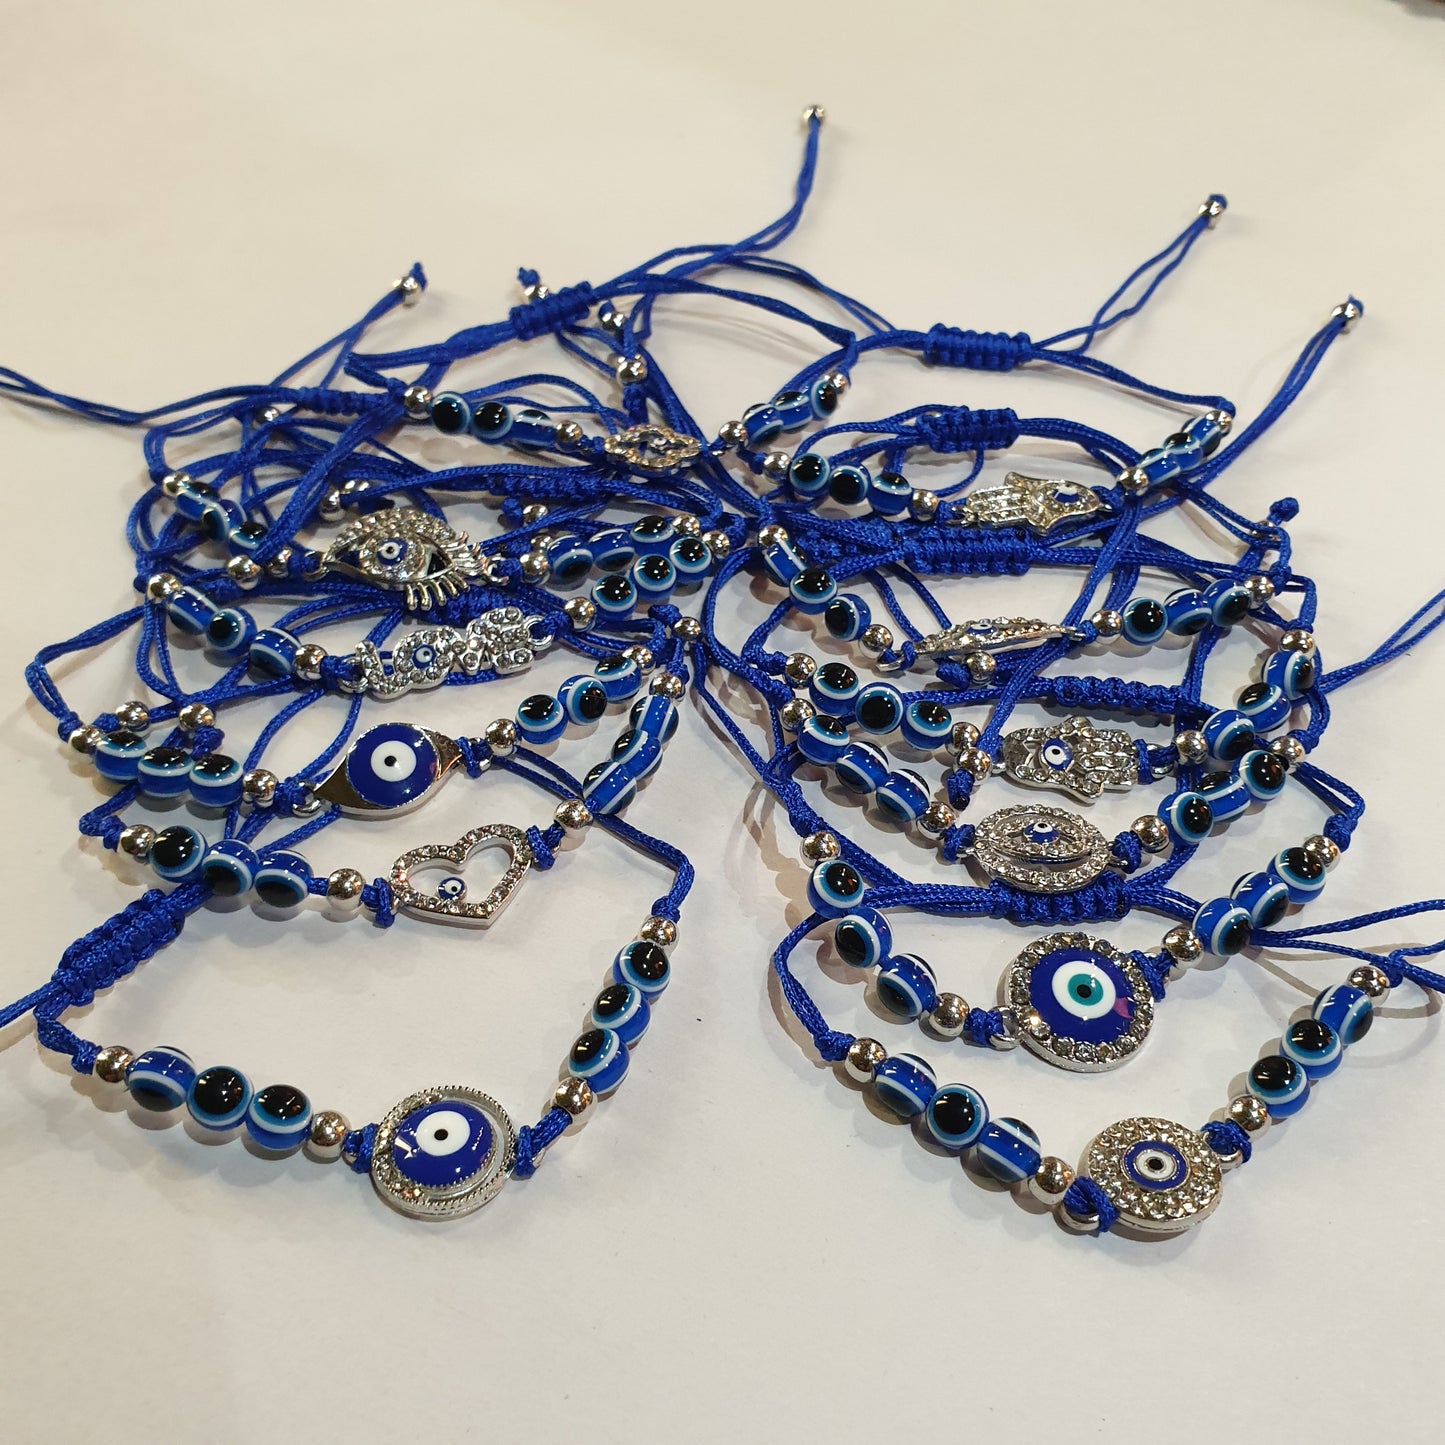 Evil Eye Protection Bracelet - multi design blue - Rivendell Shop